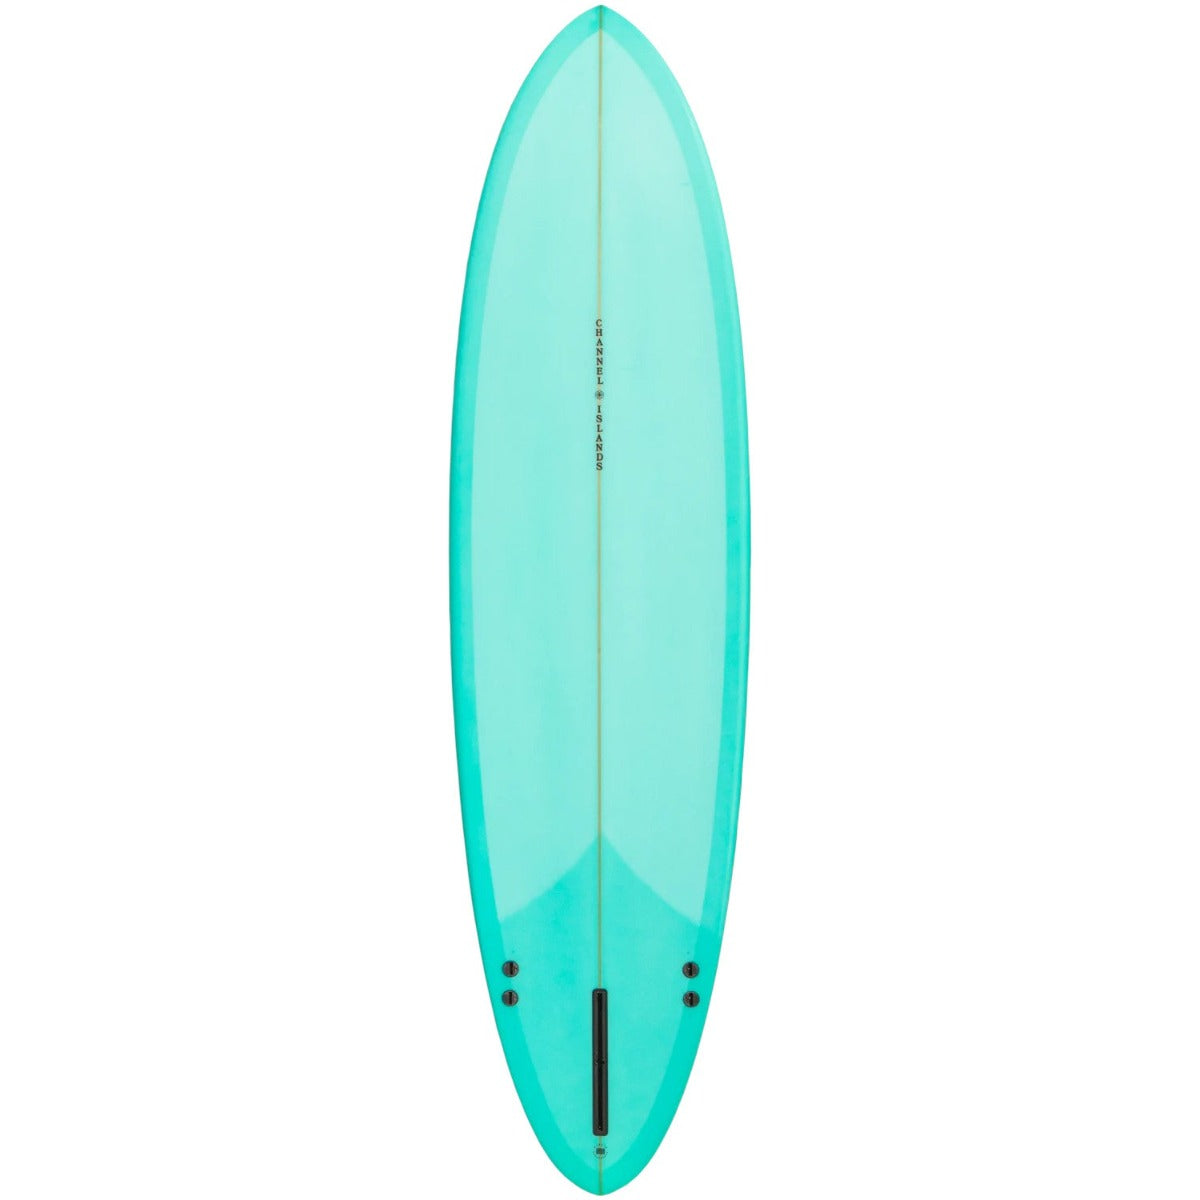 channel-islands-surfboards-midlength-ci-mid-green-bottom-galway-ireland-blacksheepsurfco